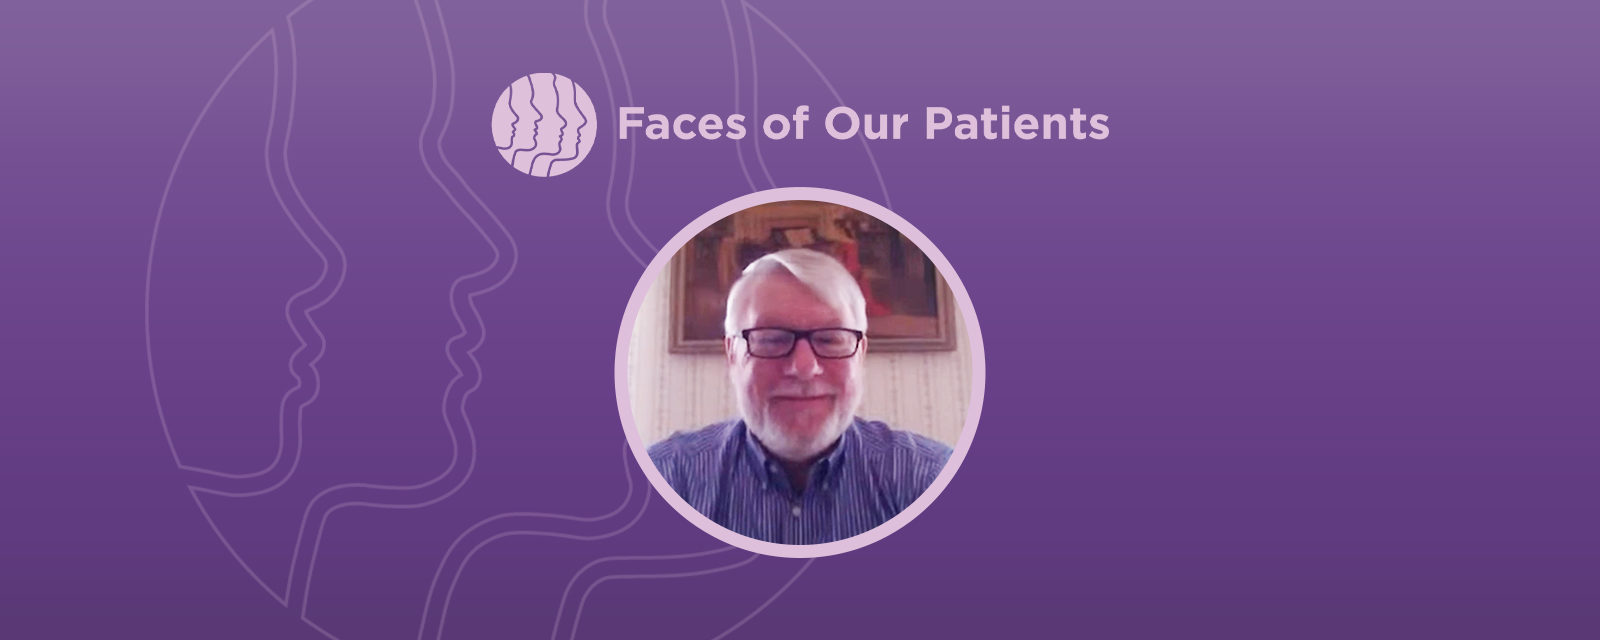 Faces of Our Patients: Psoriatic Arthritis